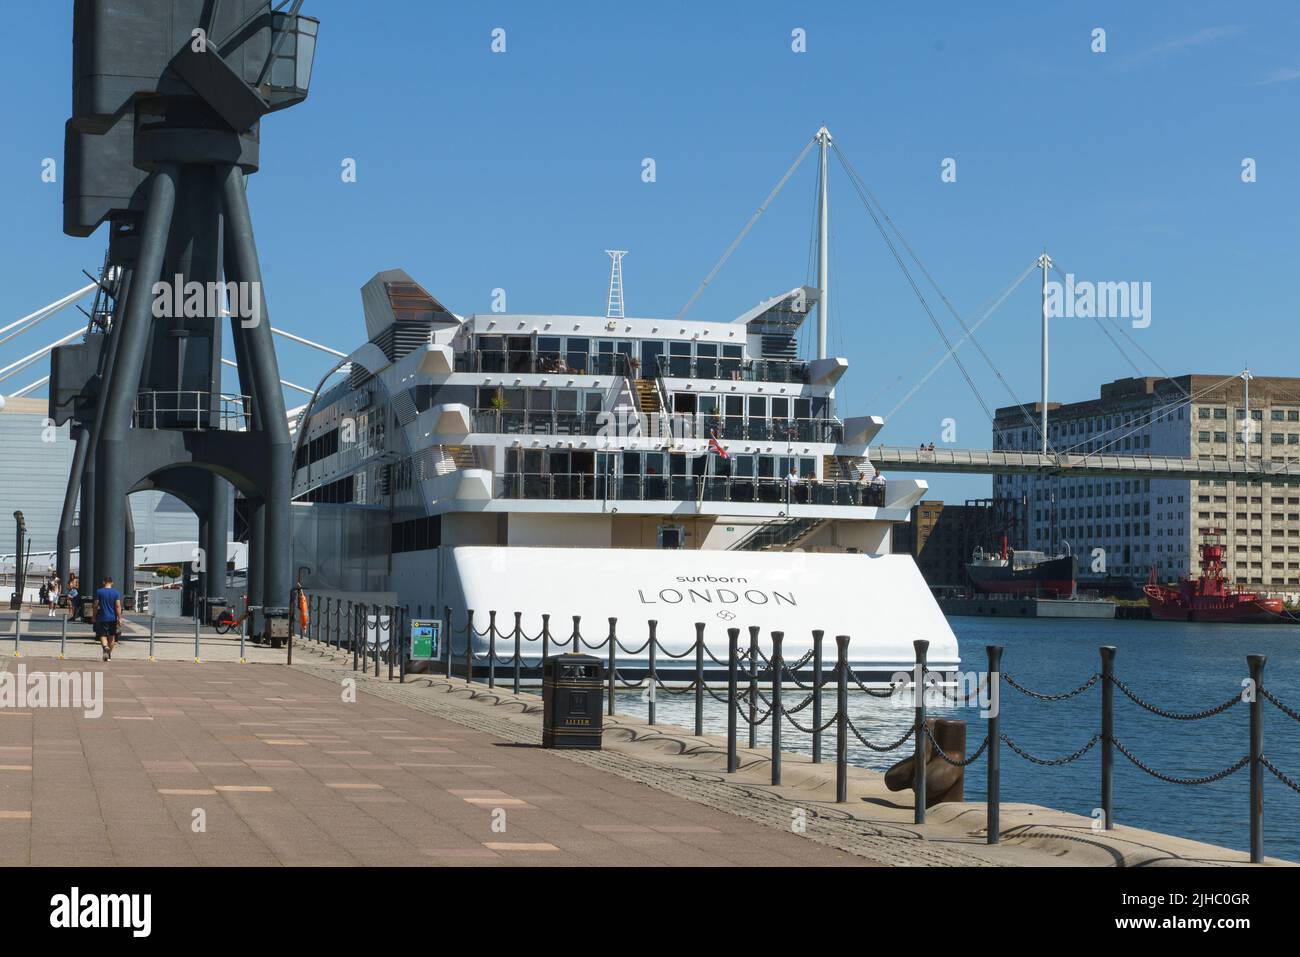 Sunborn London Yacht Hotel moored at the Royal Victoria Dock, London, UK Stock Photo